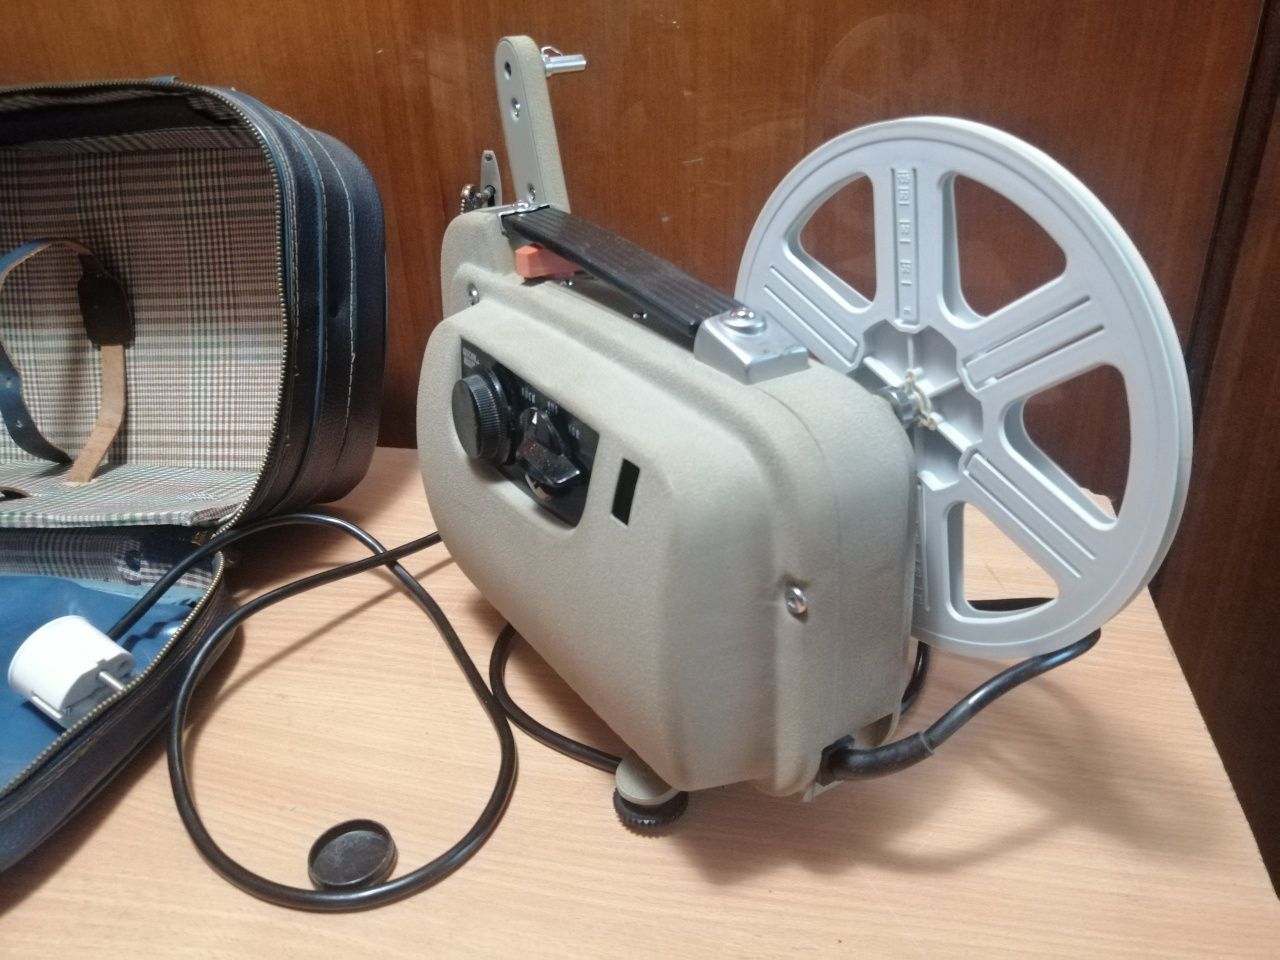 Projektor filmowy Sekonic 80 P